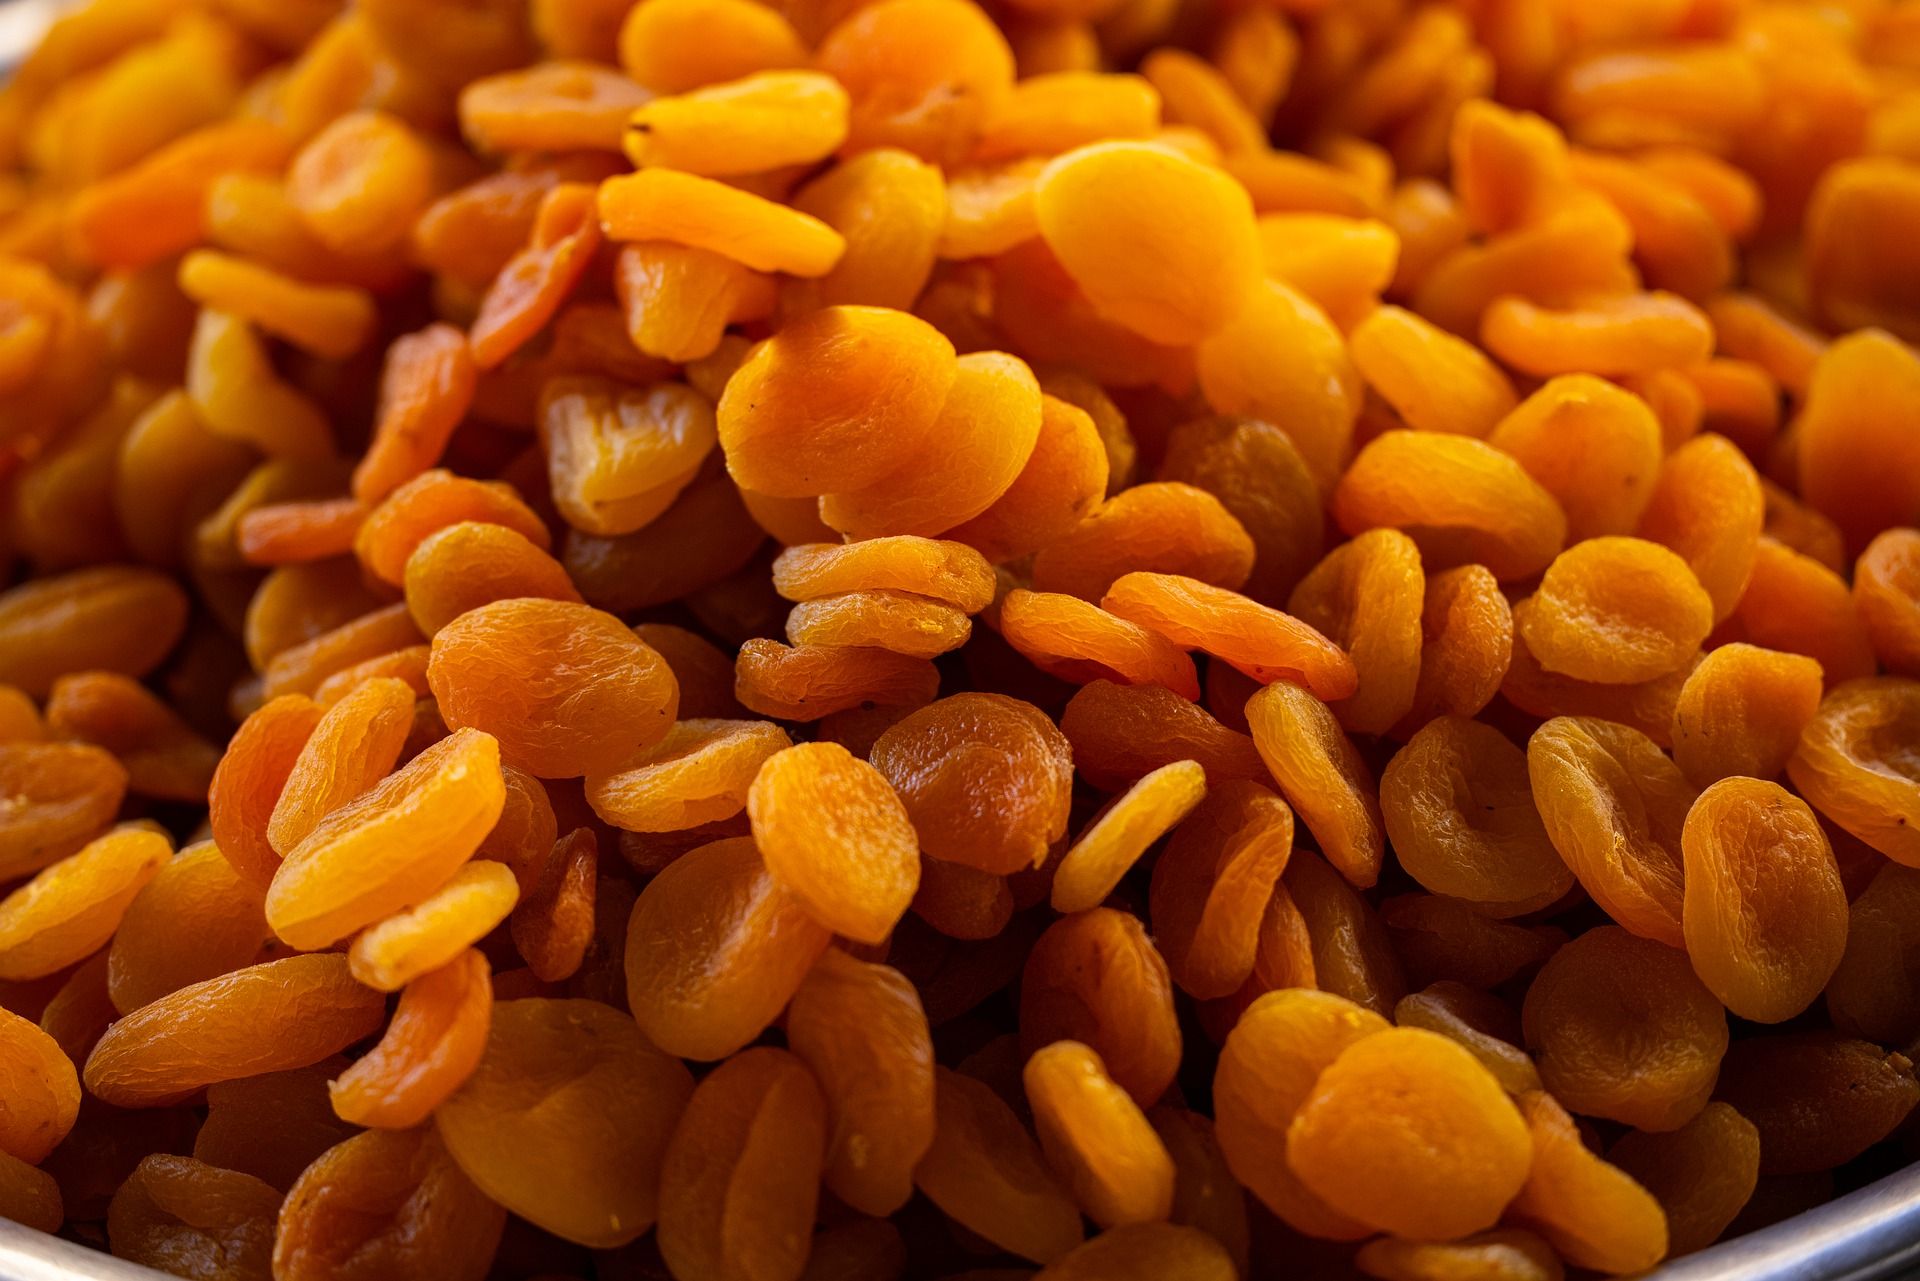 Abricots secs bio (vrac 100g) - Oclico